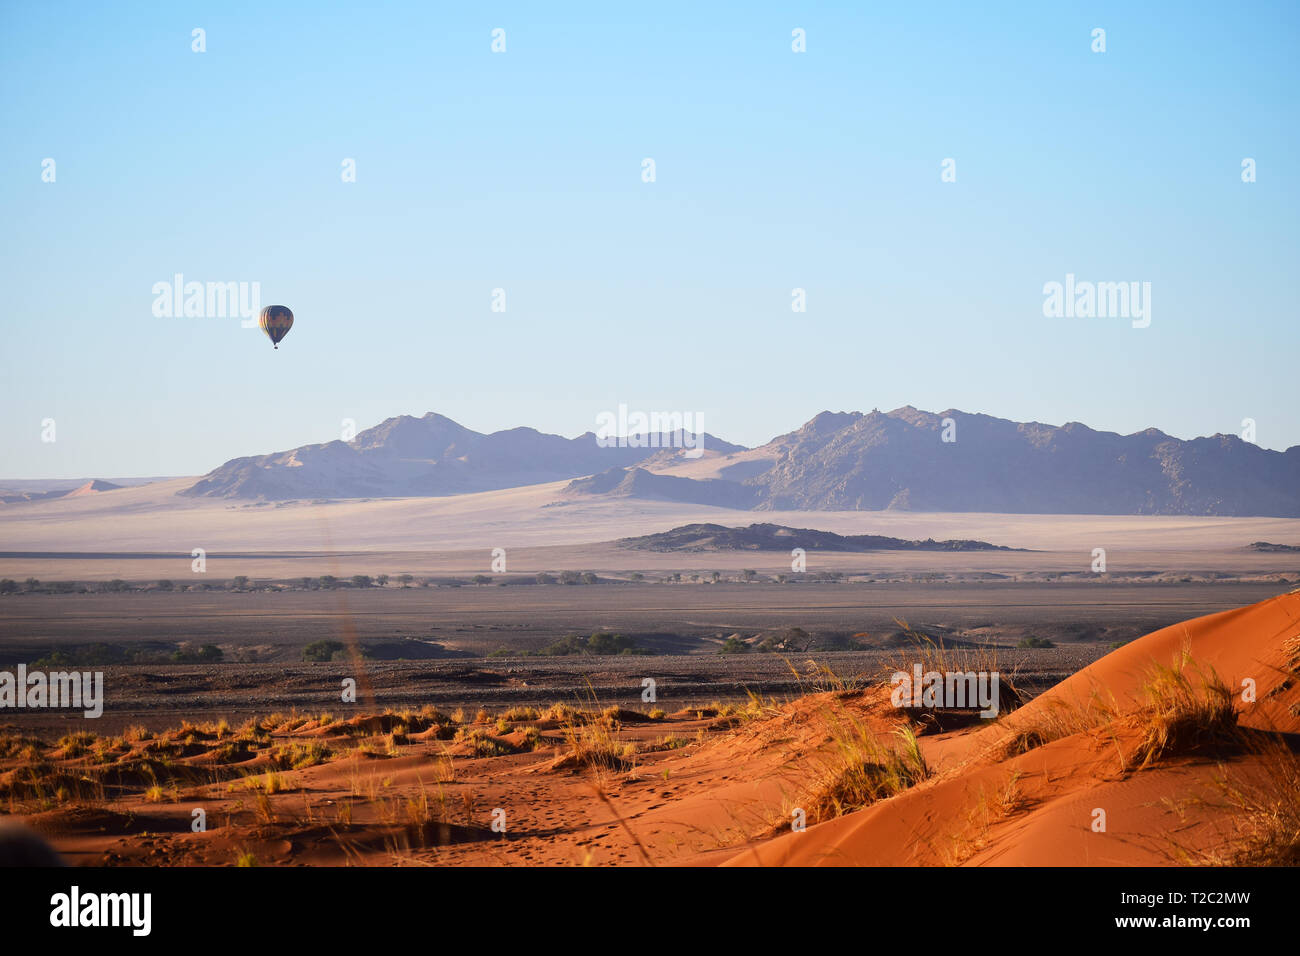 hotair balloon ride over the Namib Desert in the morning, Namibia, Sossusvlei Stock Photo